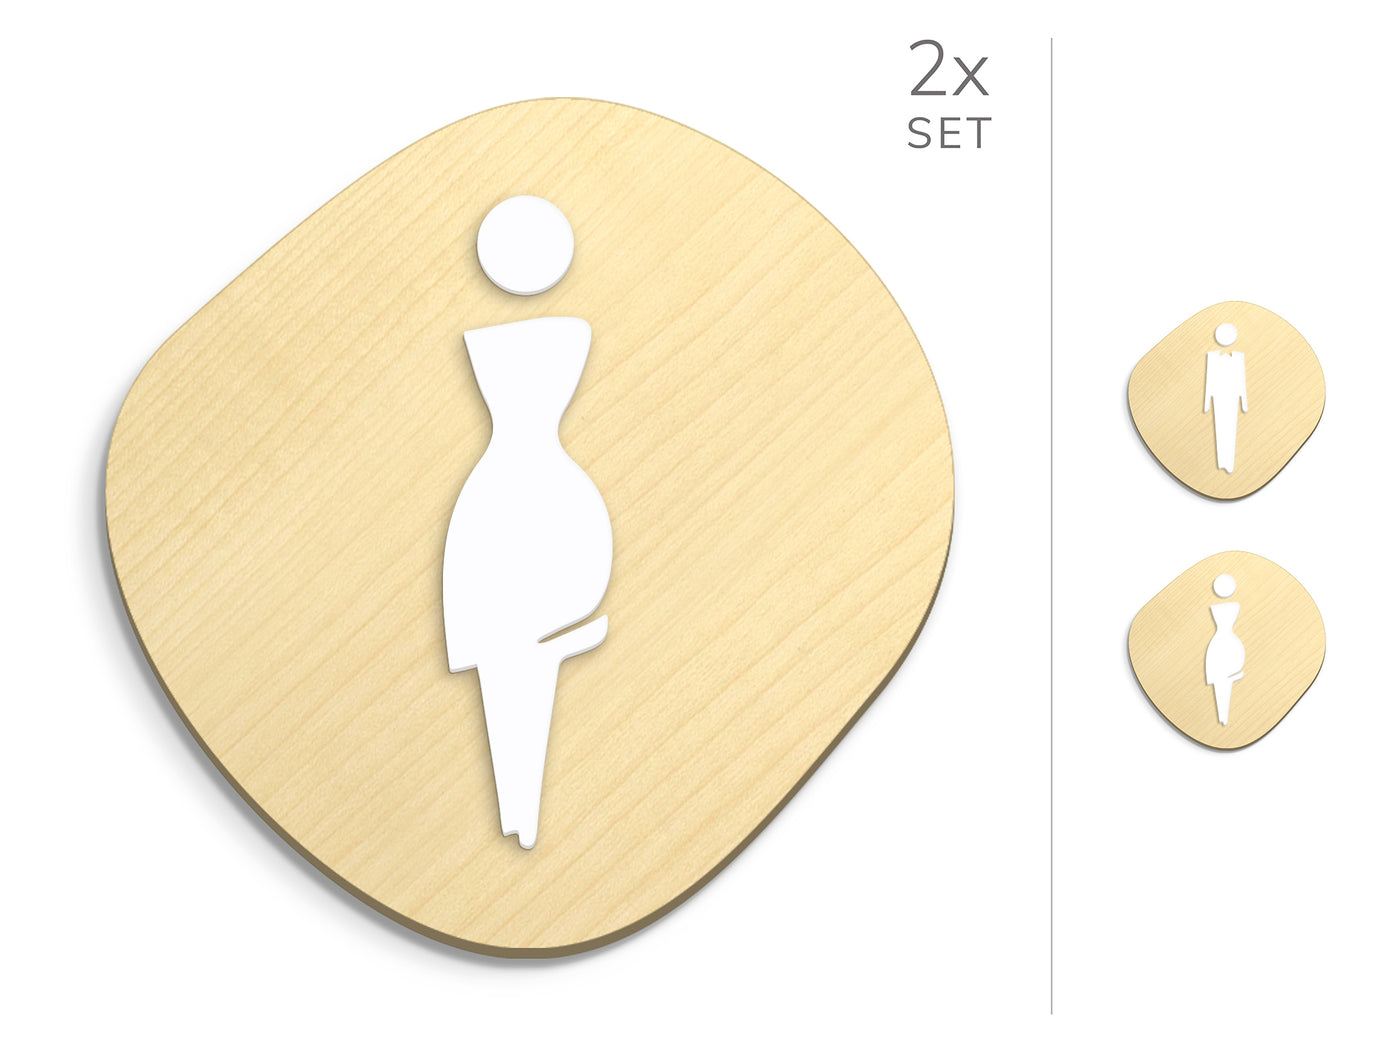 Elegant, 2x Stone shaped Base - Restroom Signs Set - Man, Woman